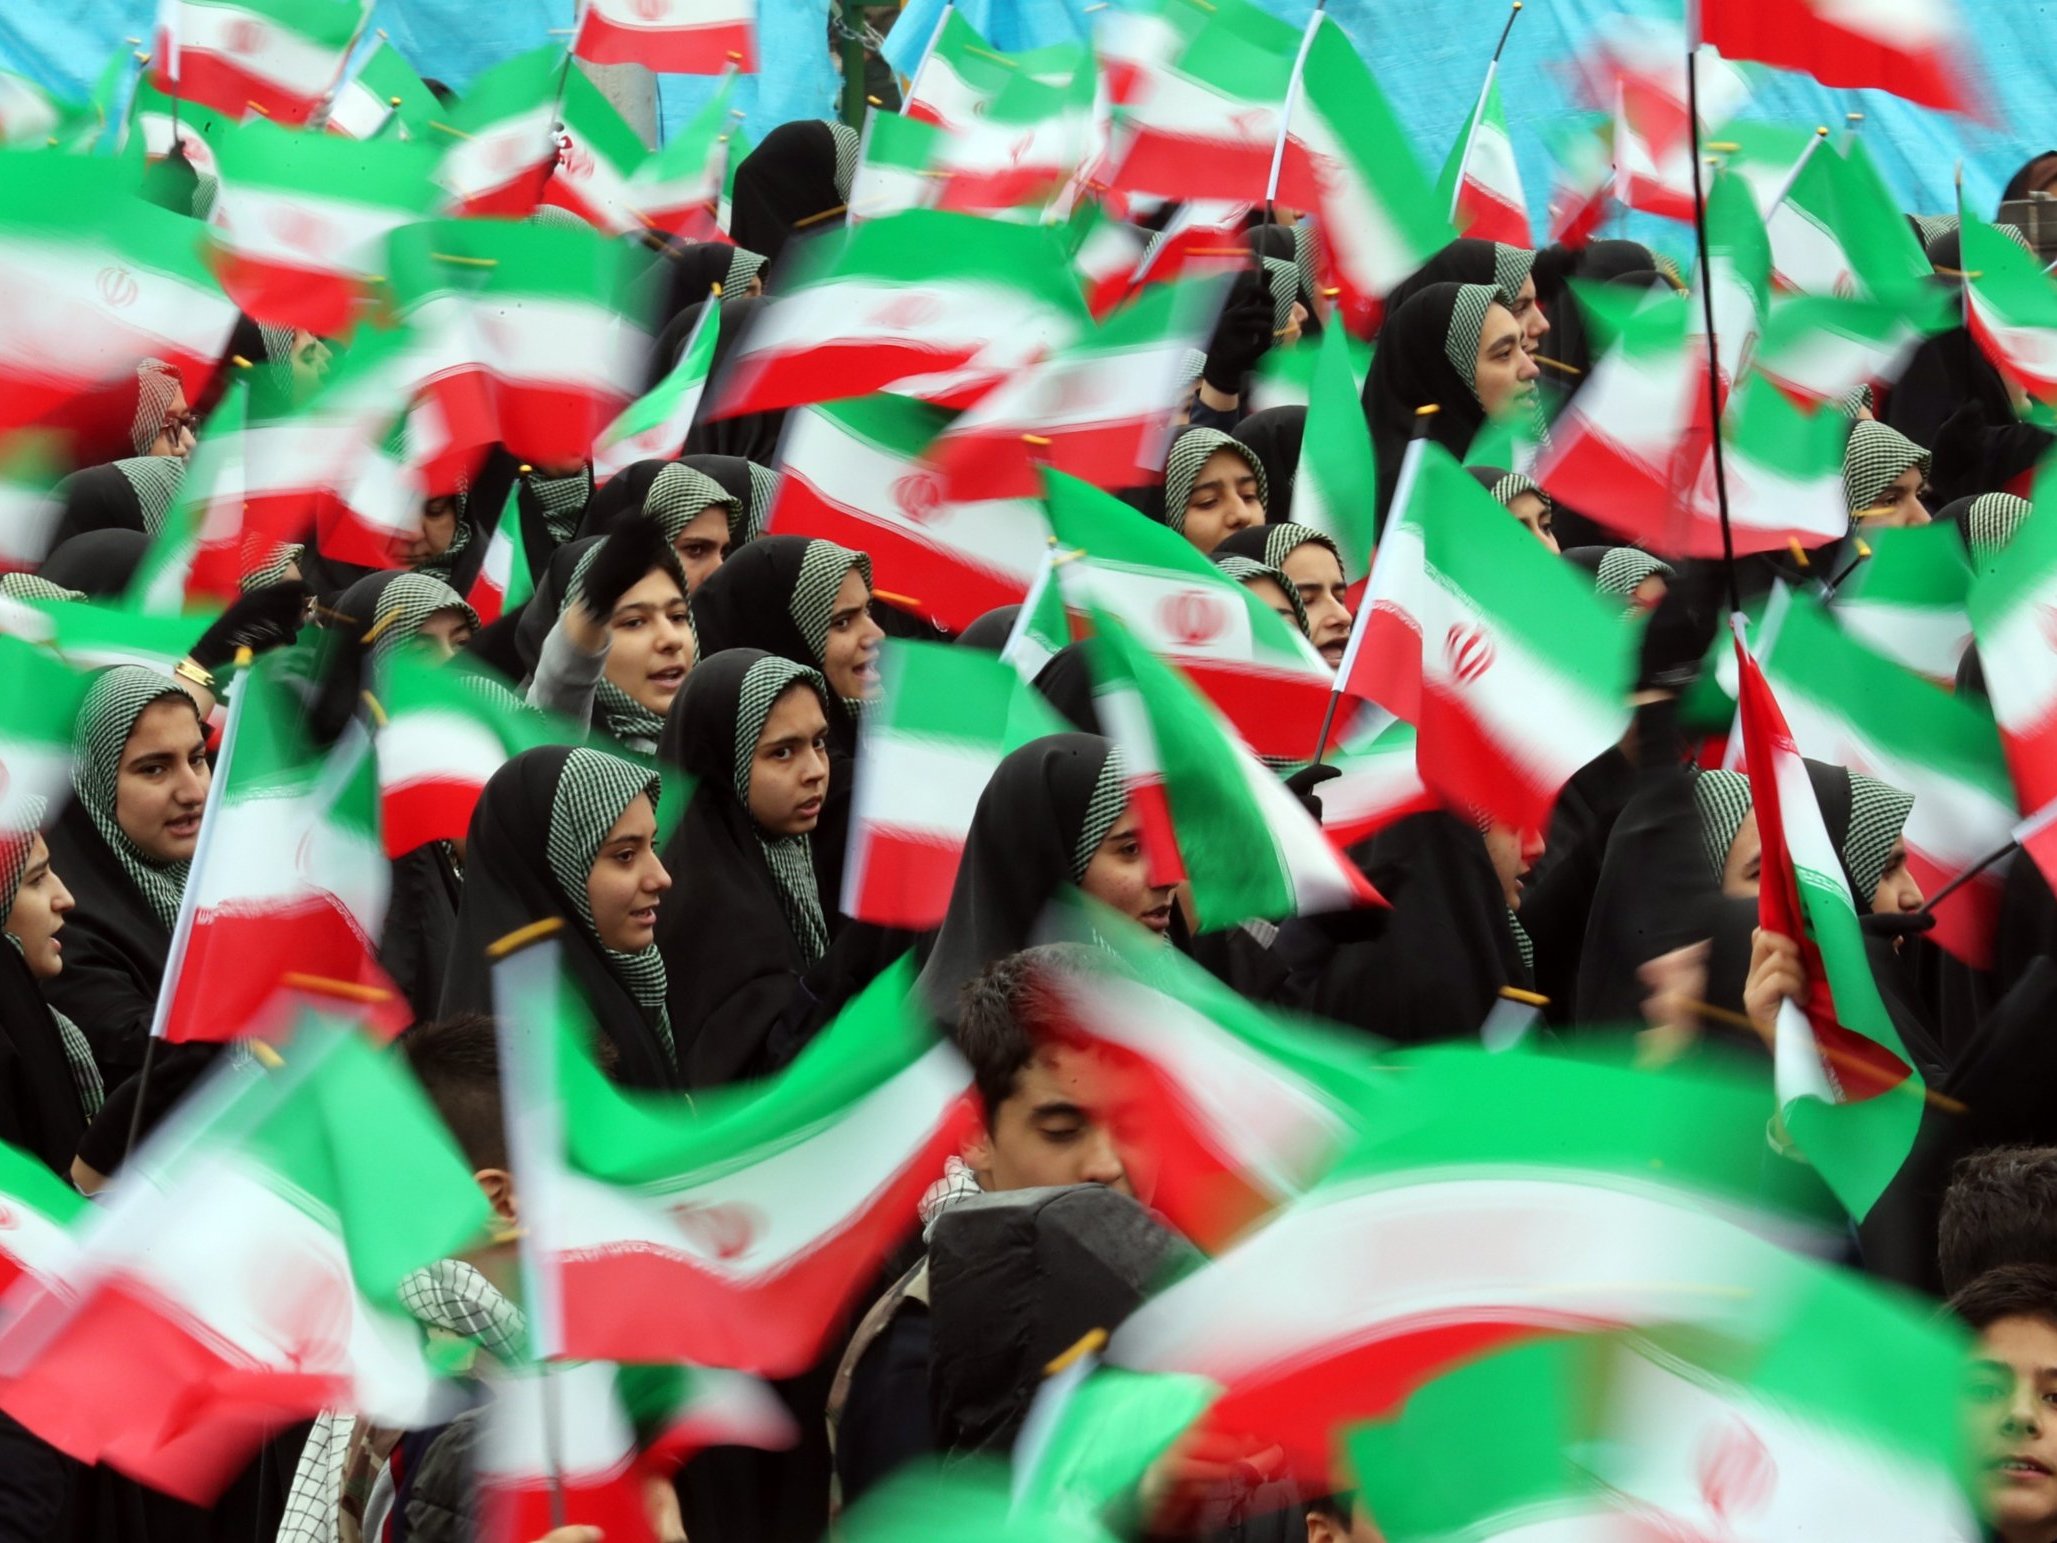 Иран мусульманская. Революция в Иране 1979. Иран — Исламская Республика Иран. Исламская революция в Иране. Провозглашение исламской Республики Иран.